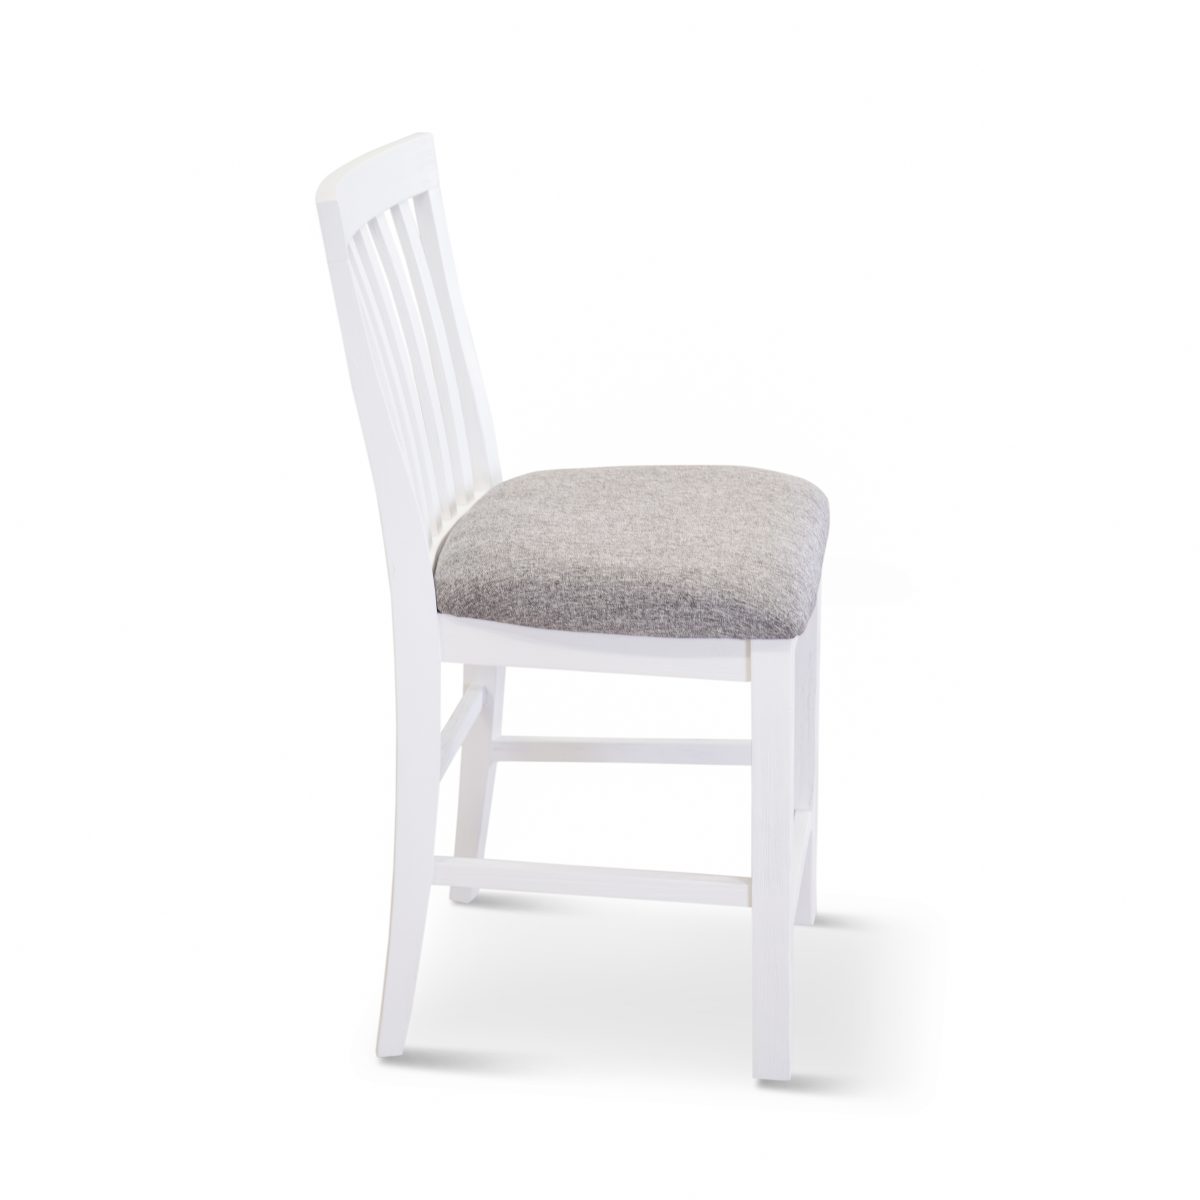 Laelia Tall Bar Chair Stool Solid Acacia Wood Coastal Furniture – White – 2